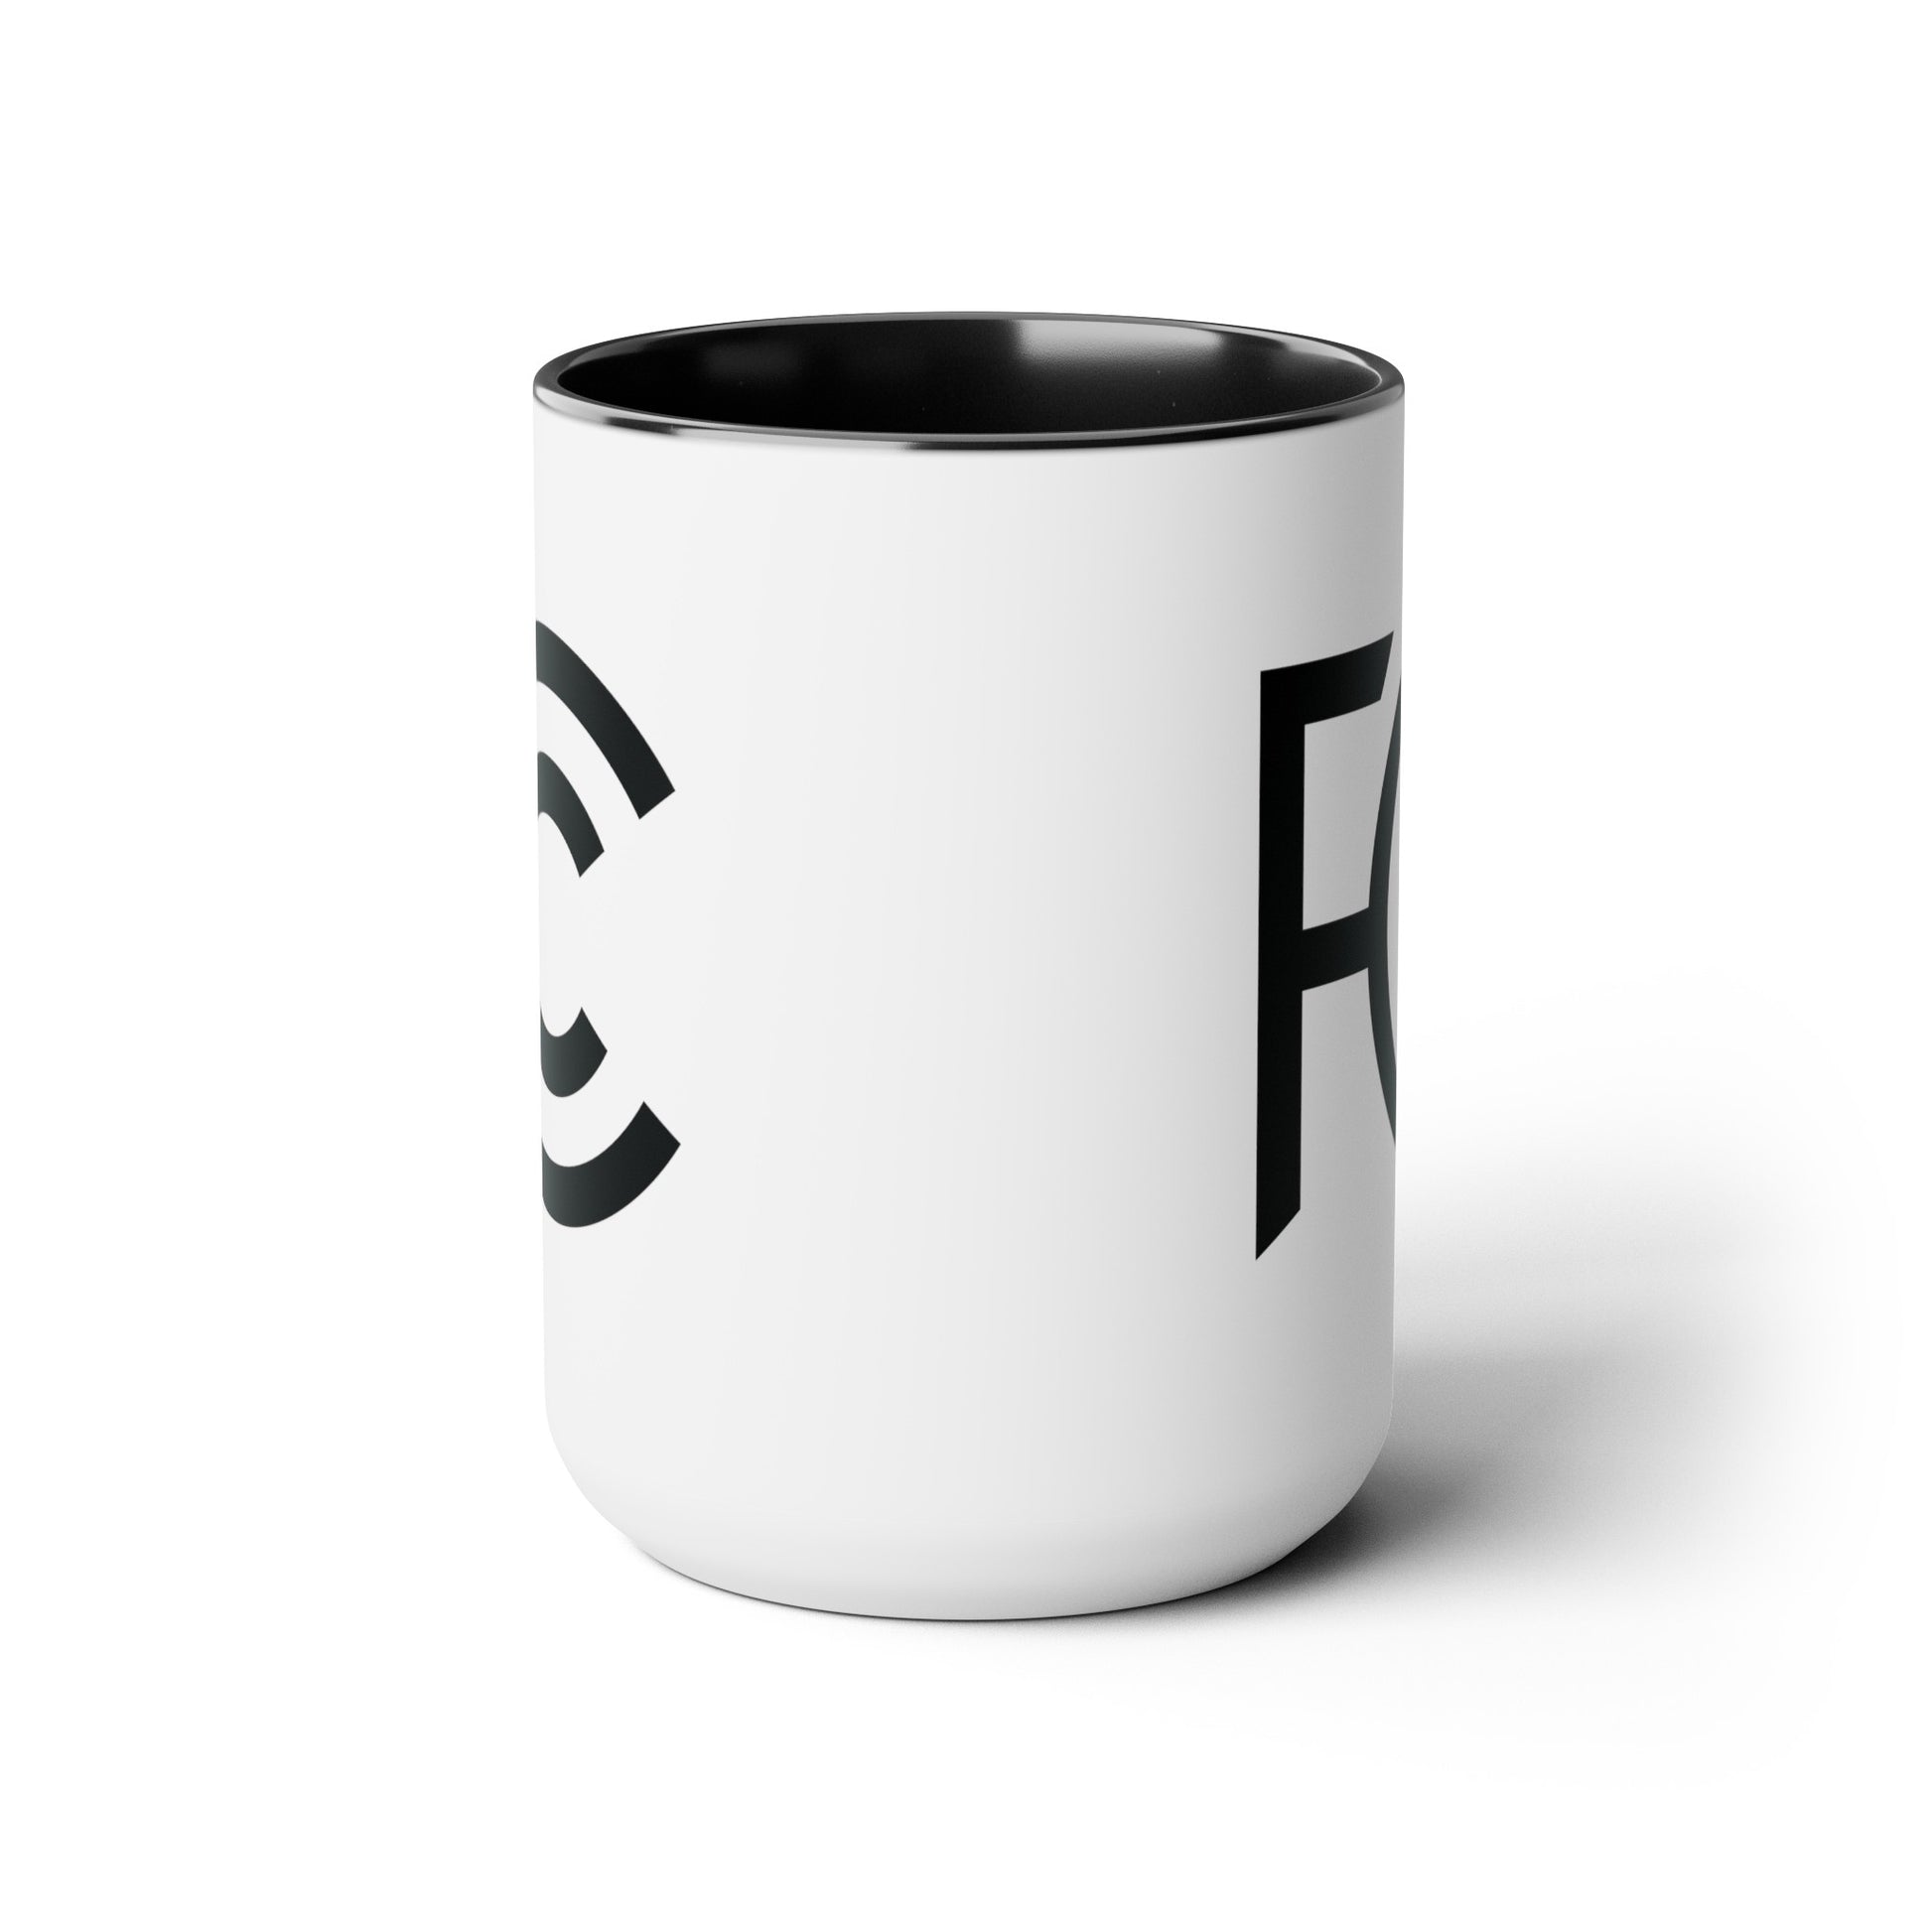 FCC Seal Coffee Mug - Double Sided Black Accent White Ceramic 15oz by TheGlassyLass.com